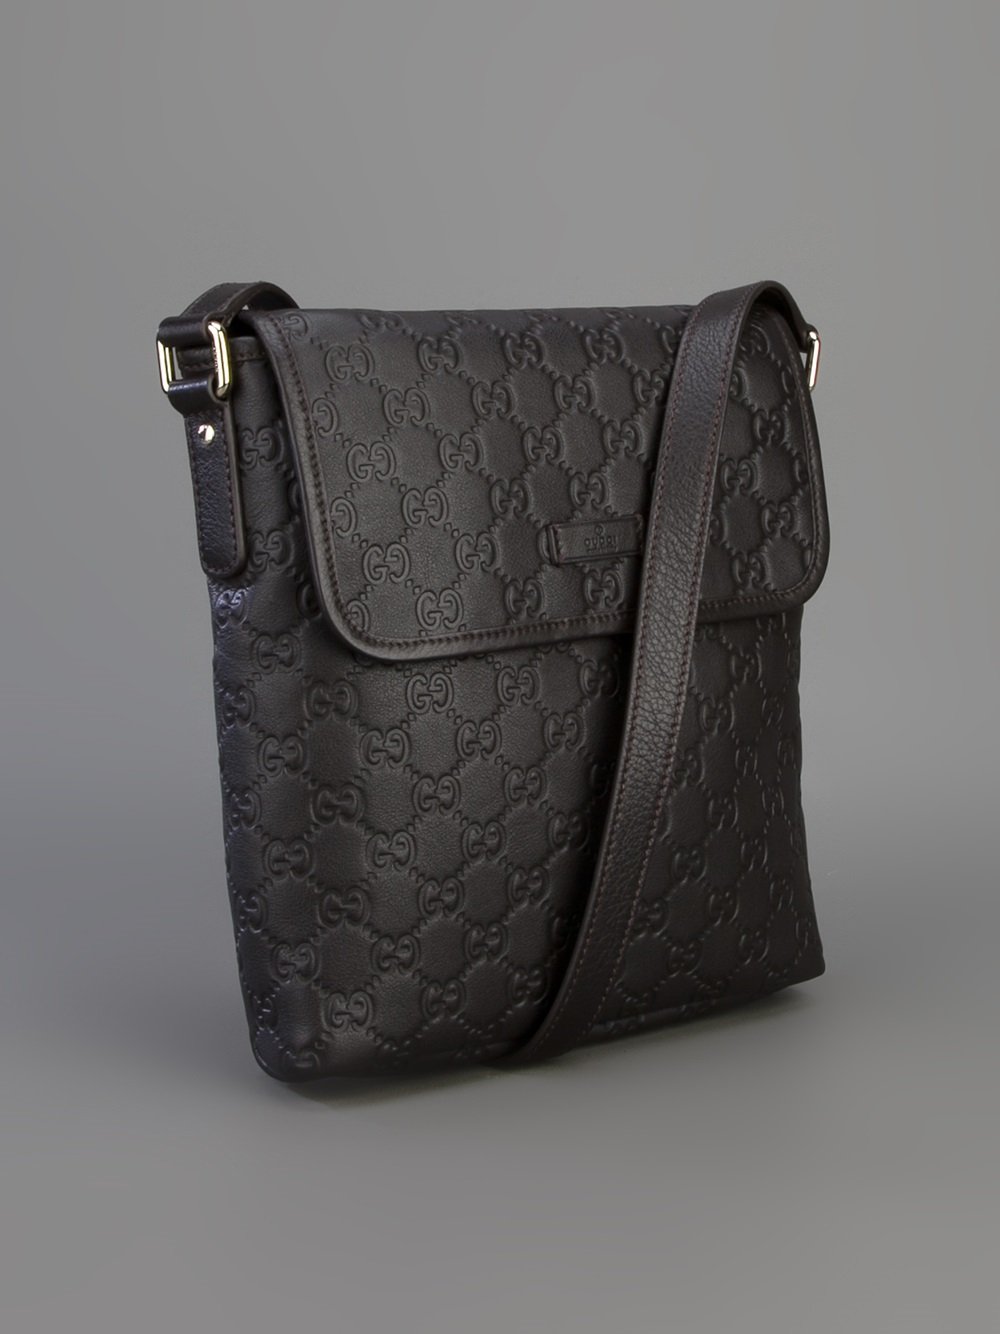 Lyst - Gucci Brand Embossed Messenger Bag in Black for Men